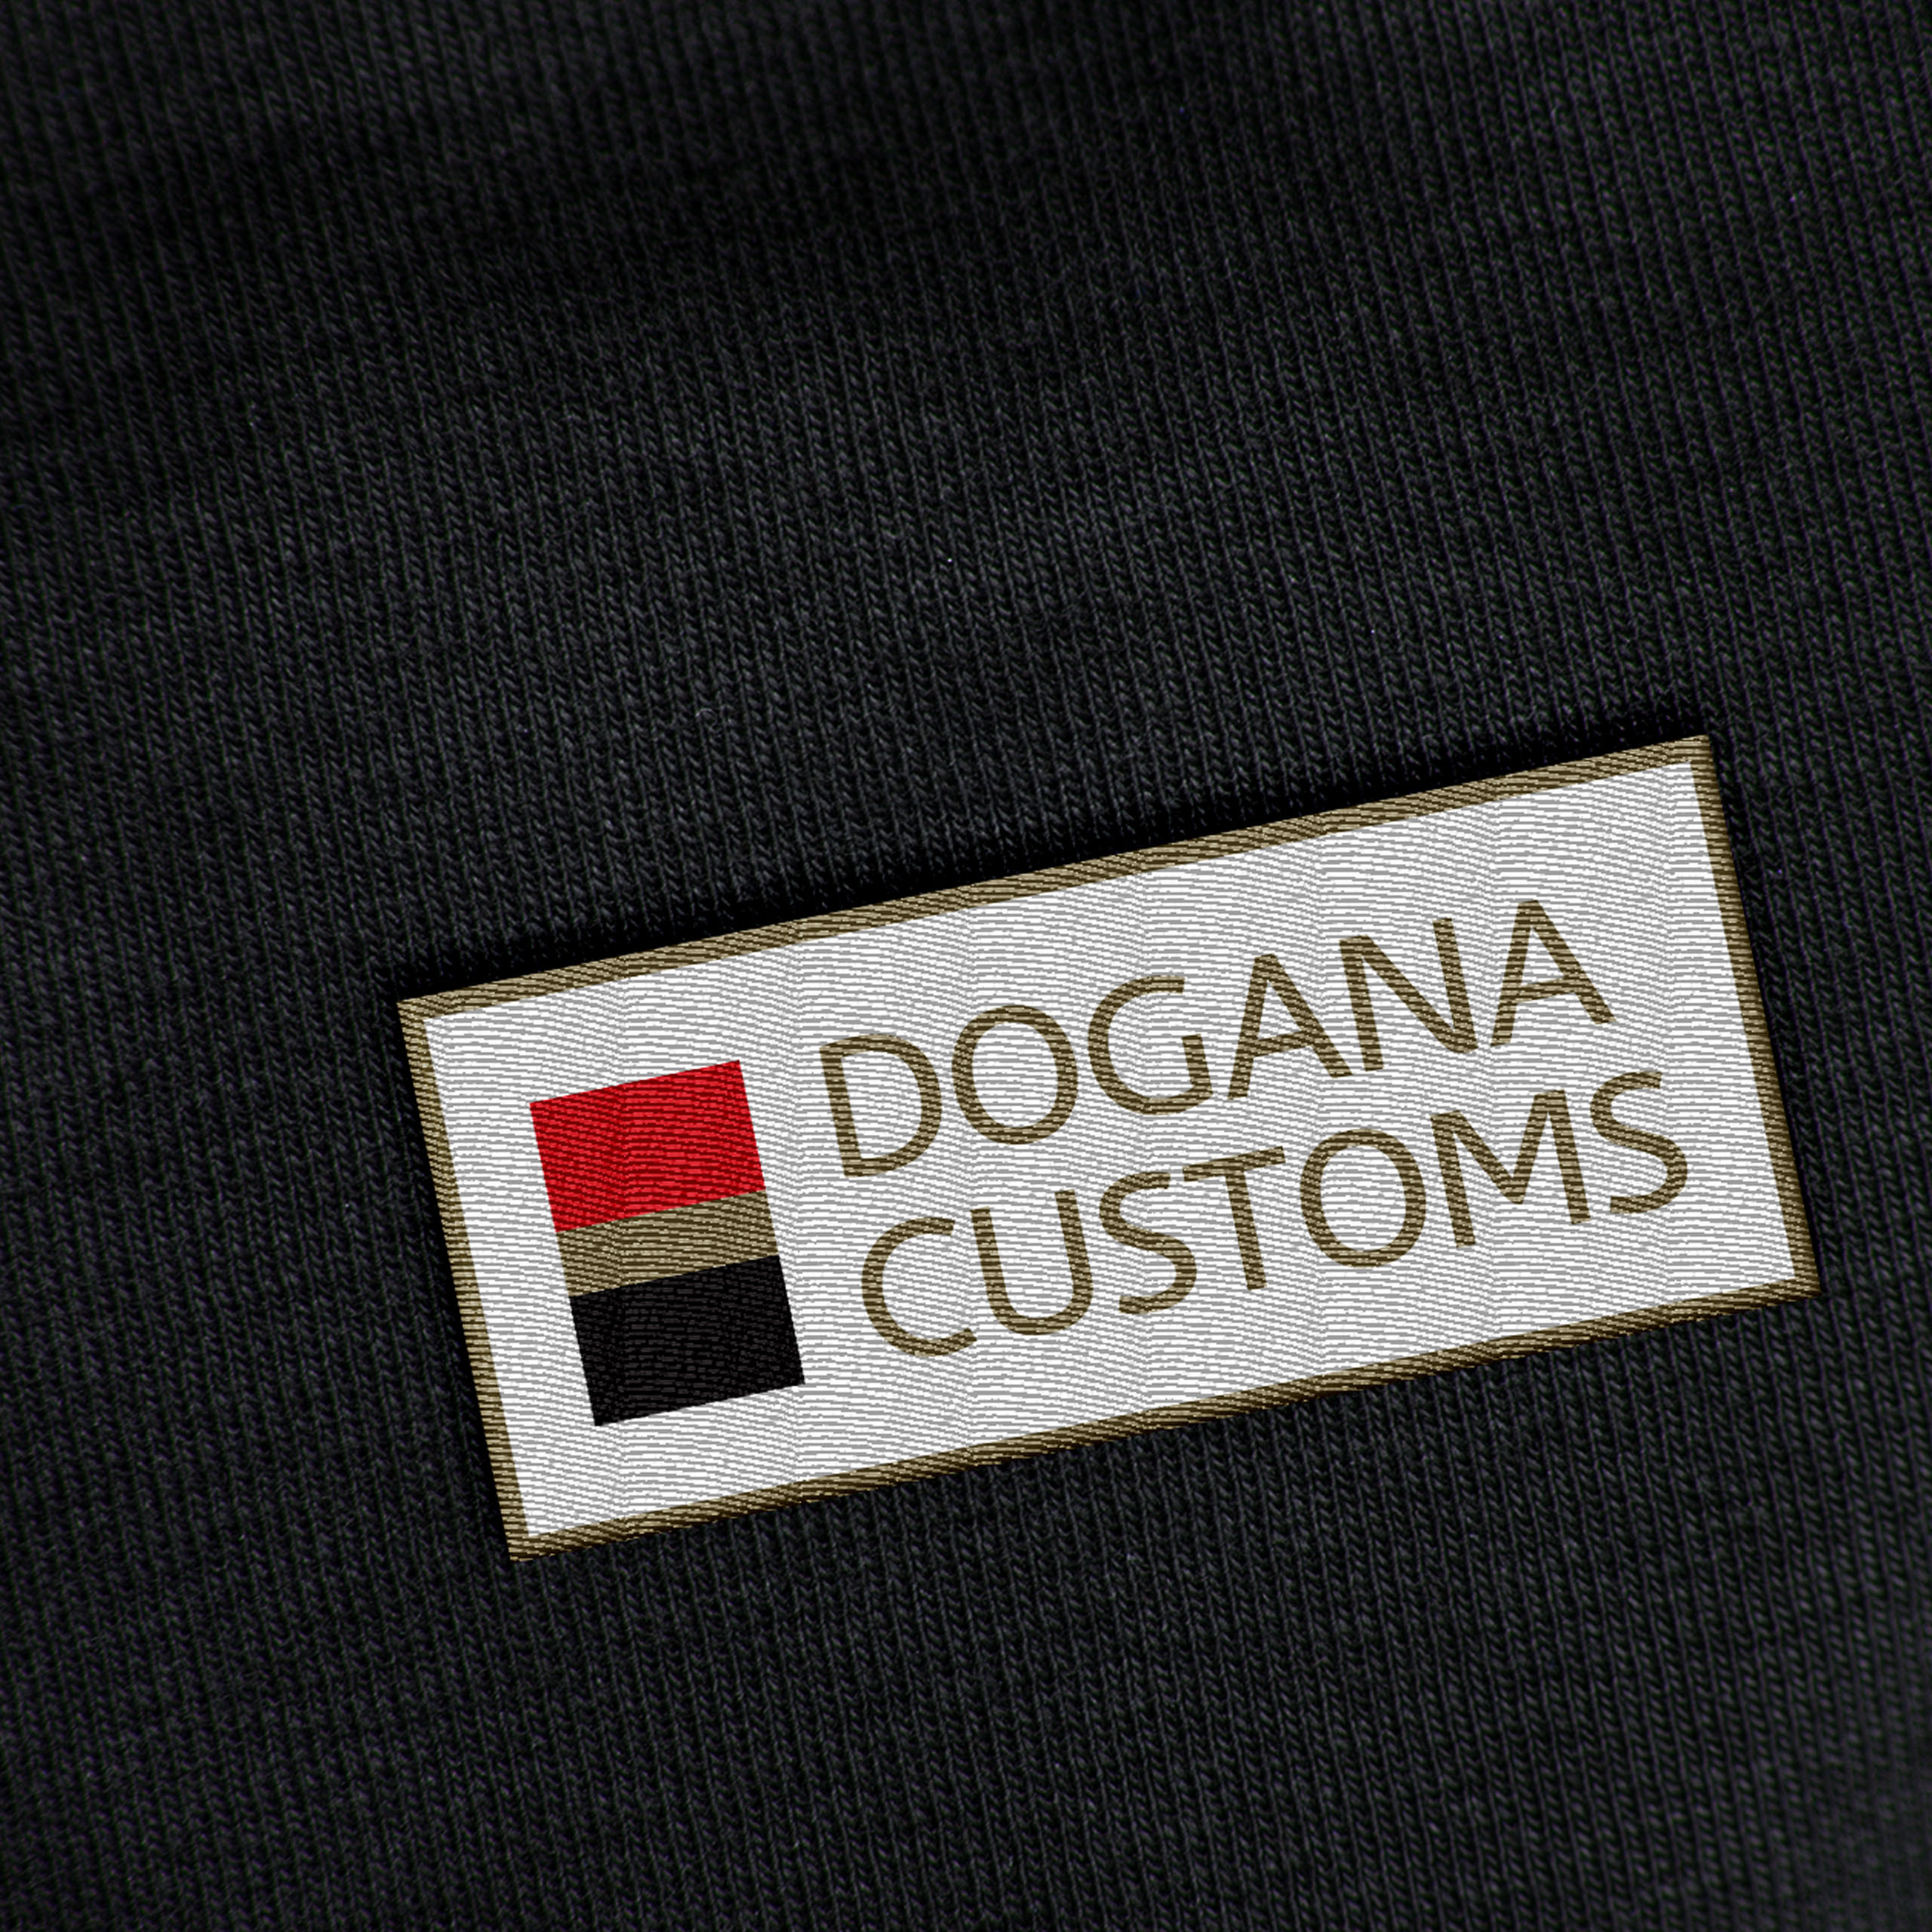 Dogana Project Img 1 - Vatra Agency / Founder & CEO Gerton Bejo